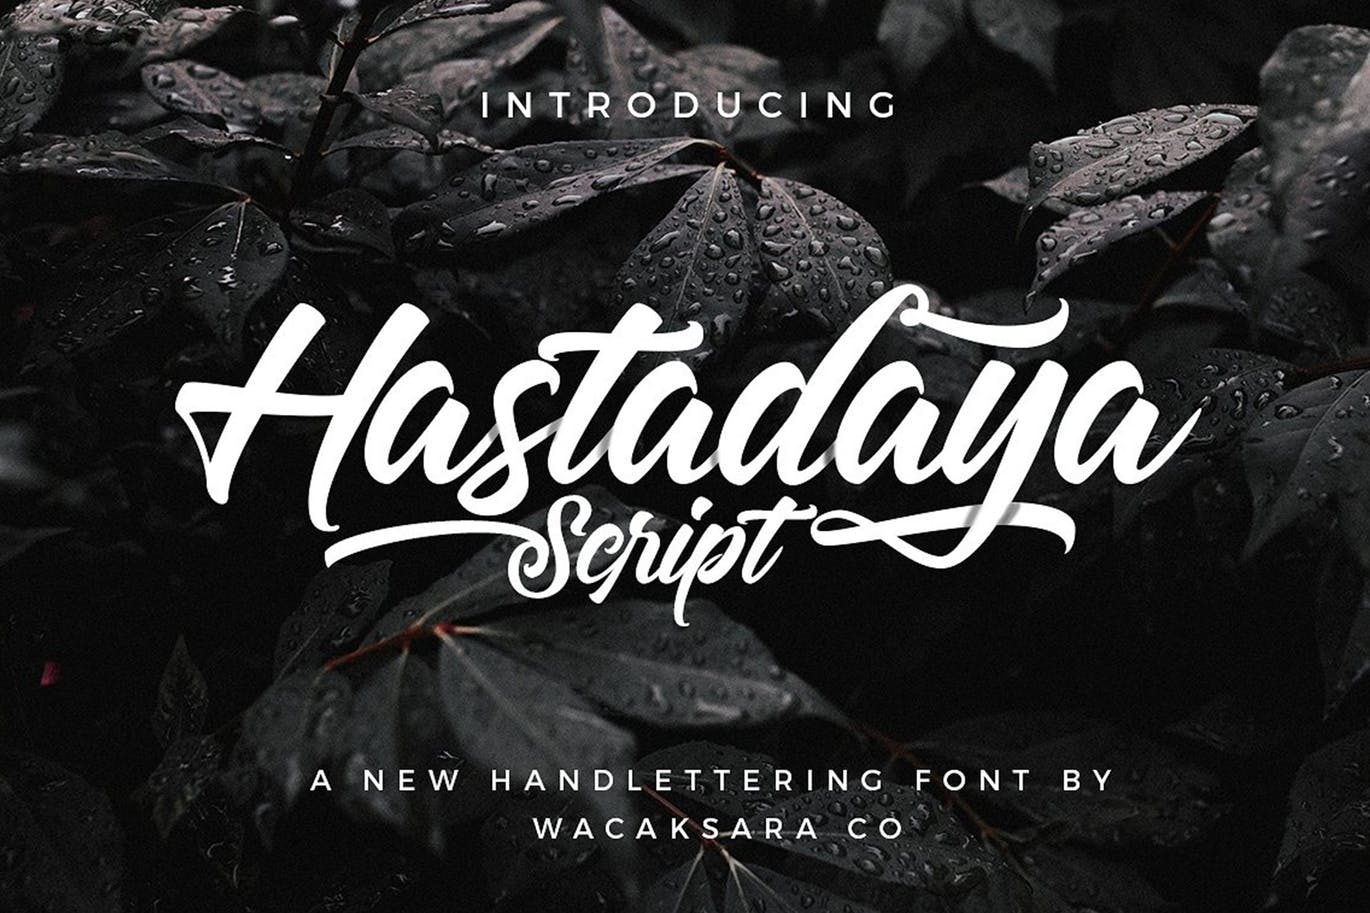 Hastadaya script for logo design